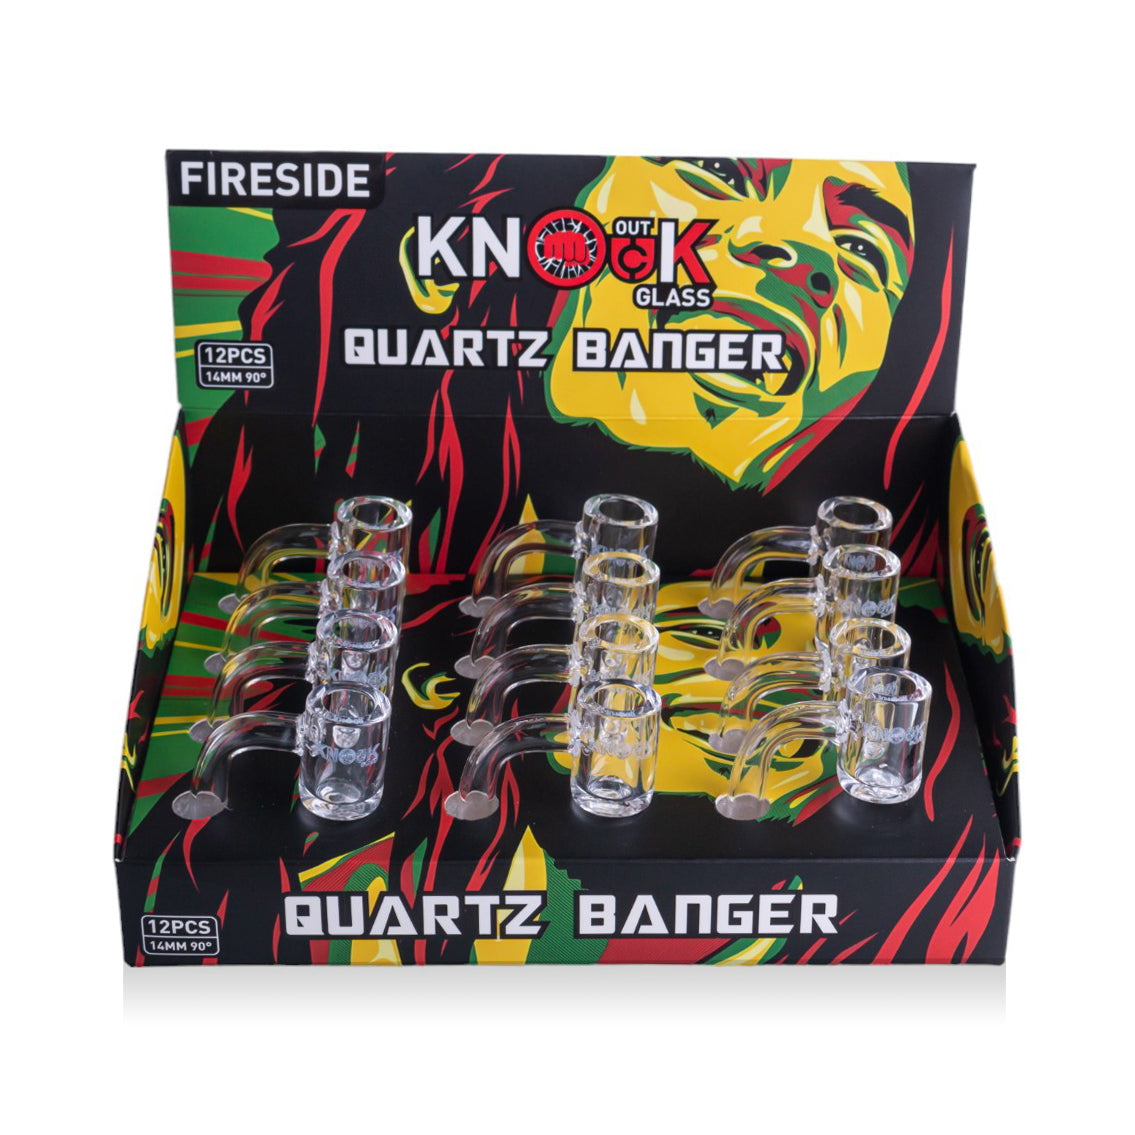 Knock Out Glass FIRESIDE Quartz Bangers - 12pcs/Box (14mm 90degree)